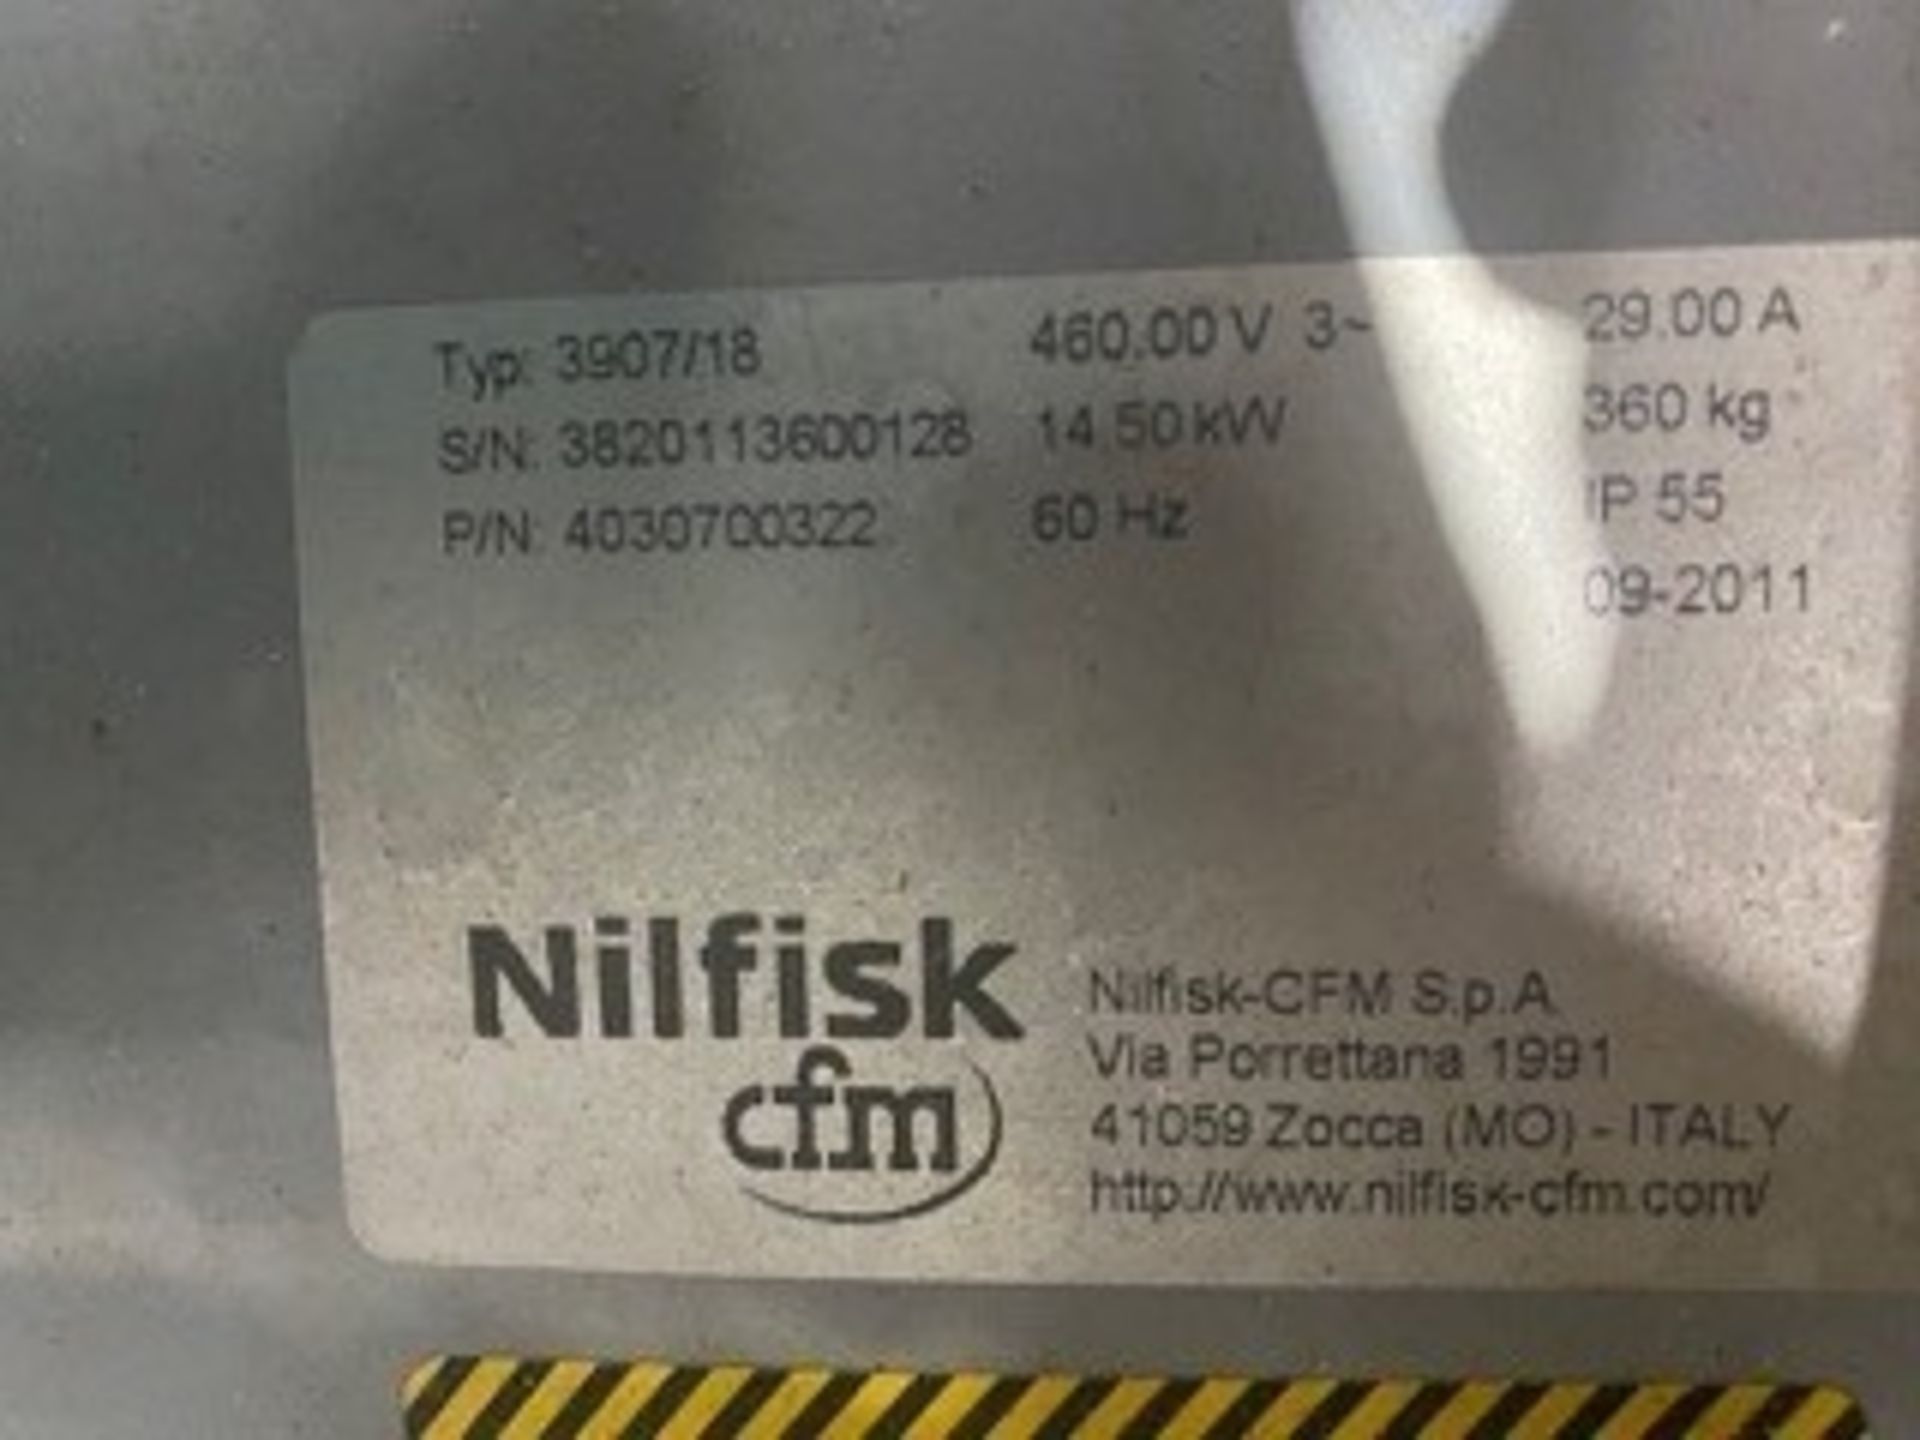 Nilfish Vacuum, Type 3907/18, S/N 382011300128, 460 V, (NOTE: Missing Parts) (Loading Fee $150) ( - Image 2 of 2